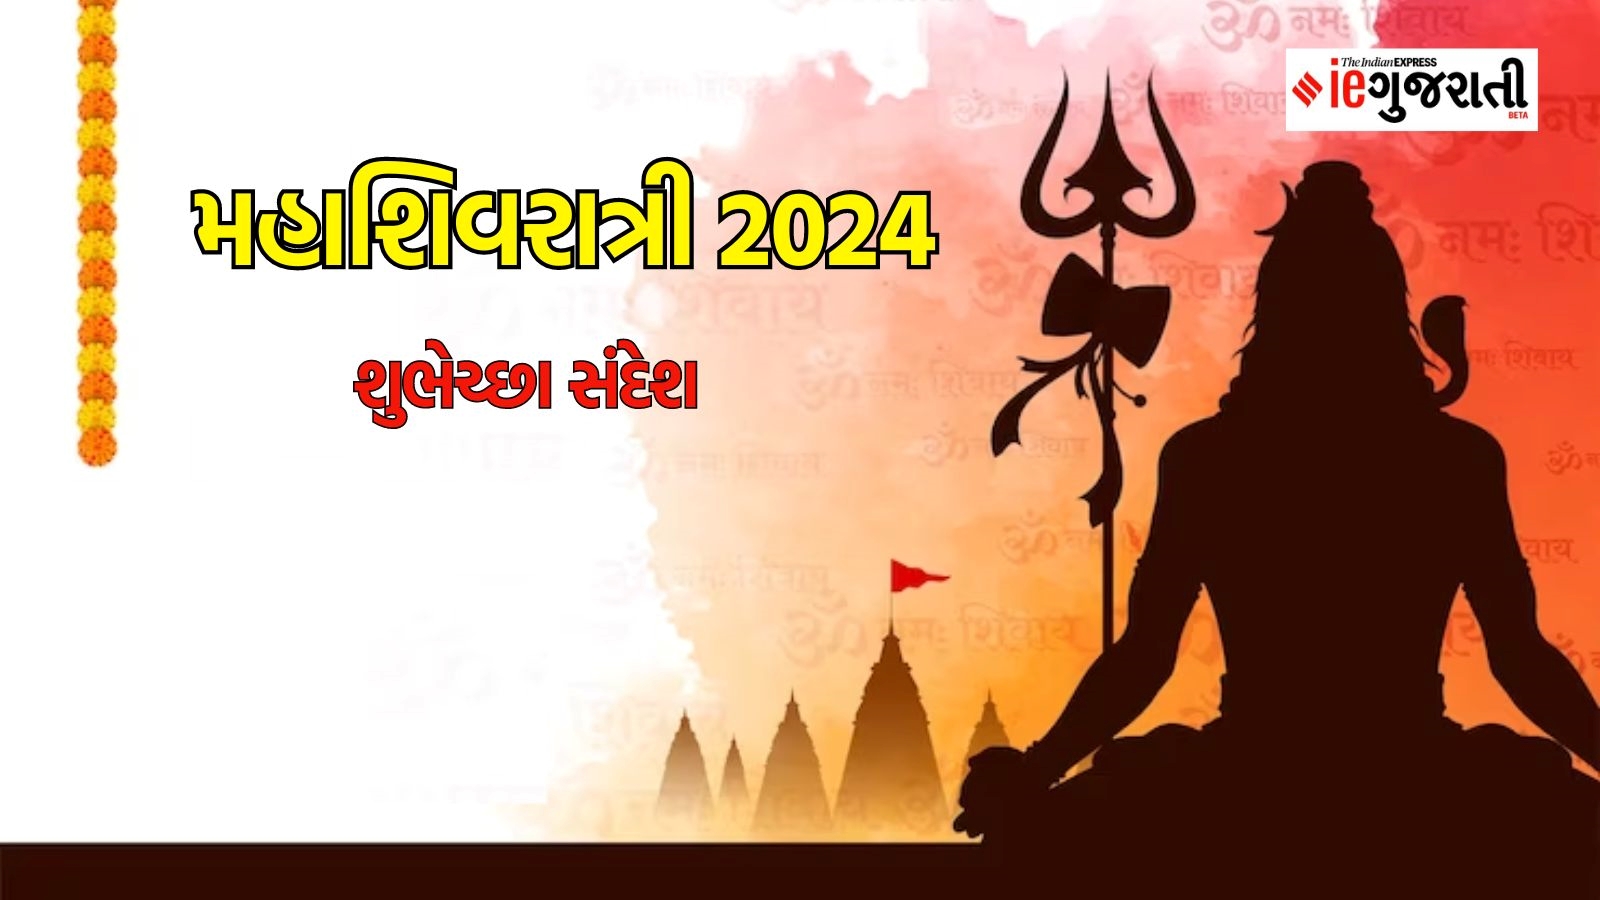 Happy Maha Shivaratri 2024 Wishes, Quotes, WhatsApp Messages, To Share